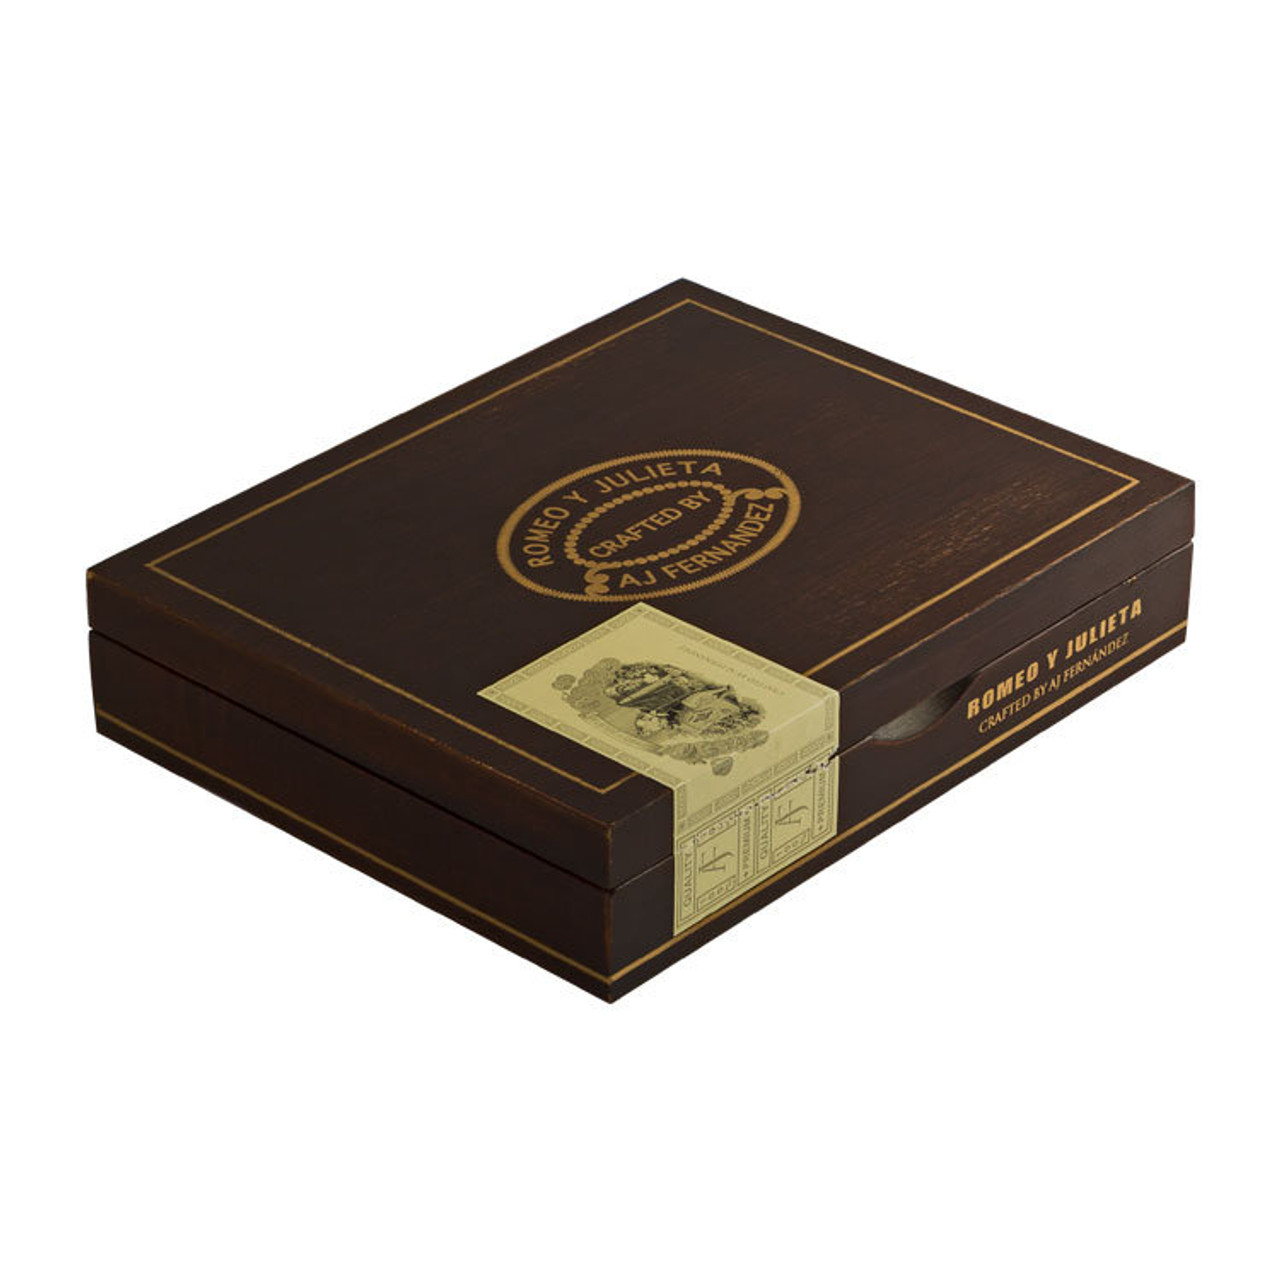 Romeo y Julieta Crafted by AJ Fernandez Gordo Cigars - 6 x 60 (Box of 20) *Box